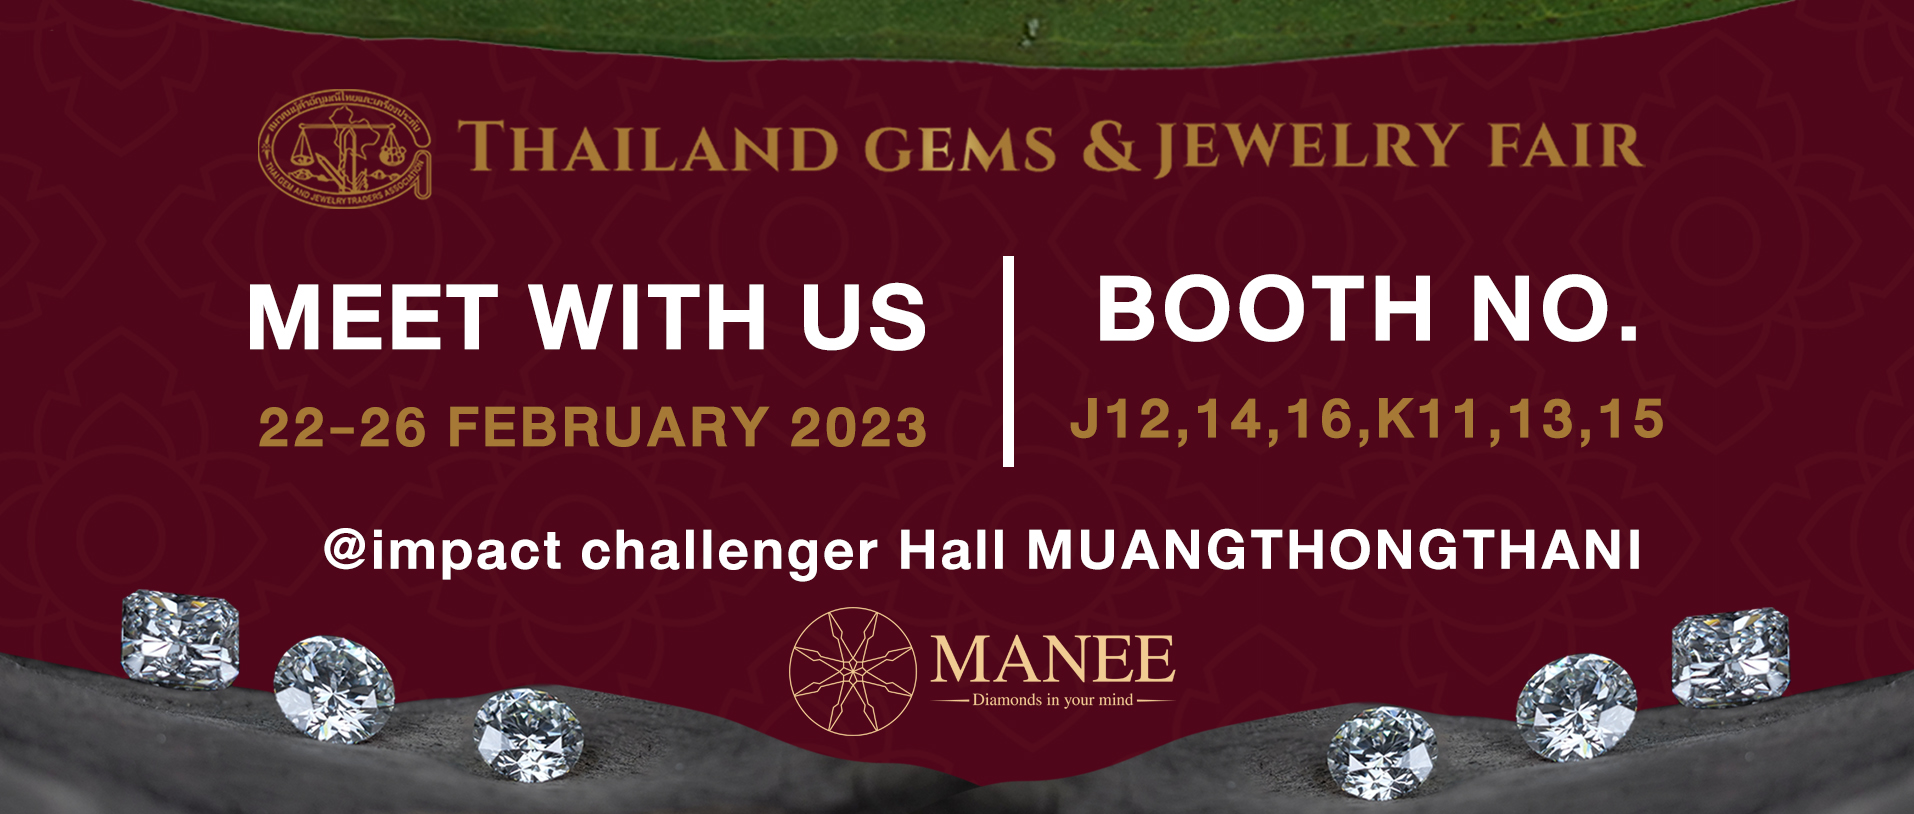 Thailand gems & jewelry fair 2023